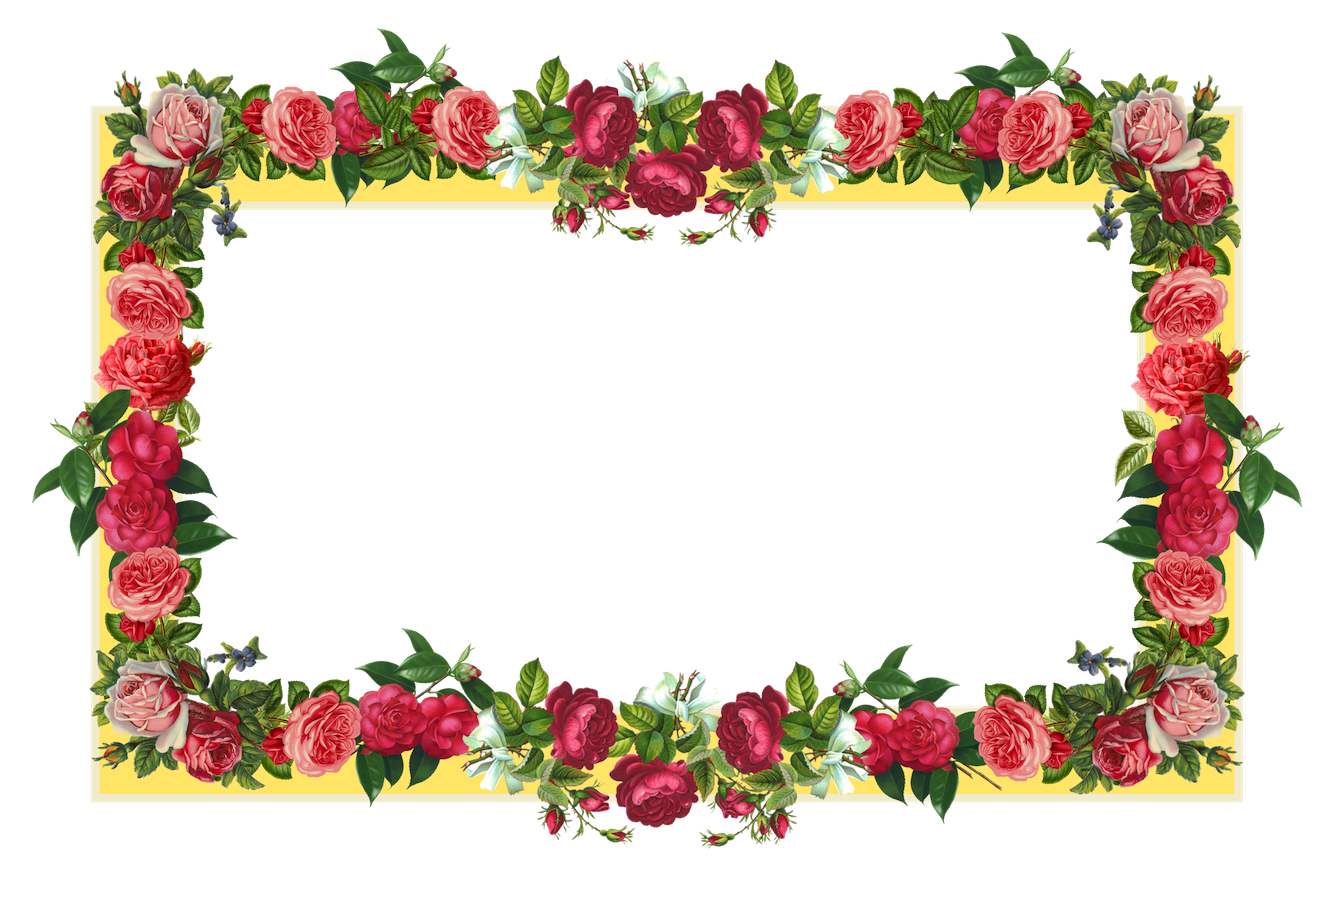 Rose Flower Border Design Frame - Border Designs